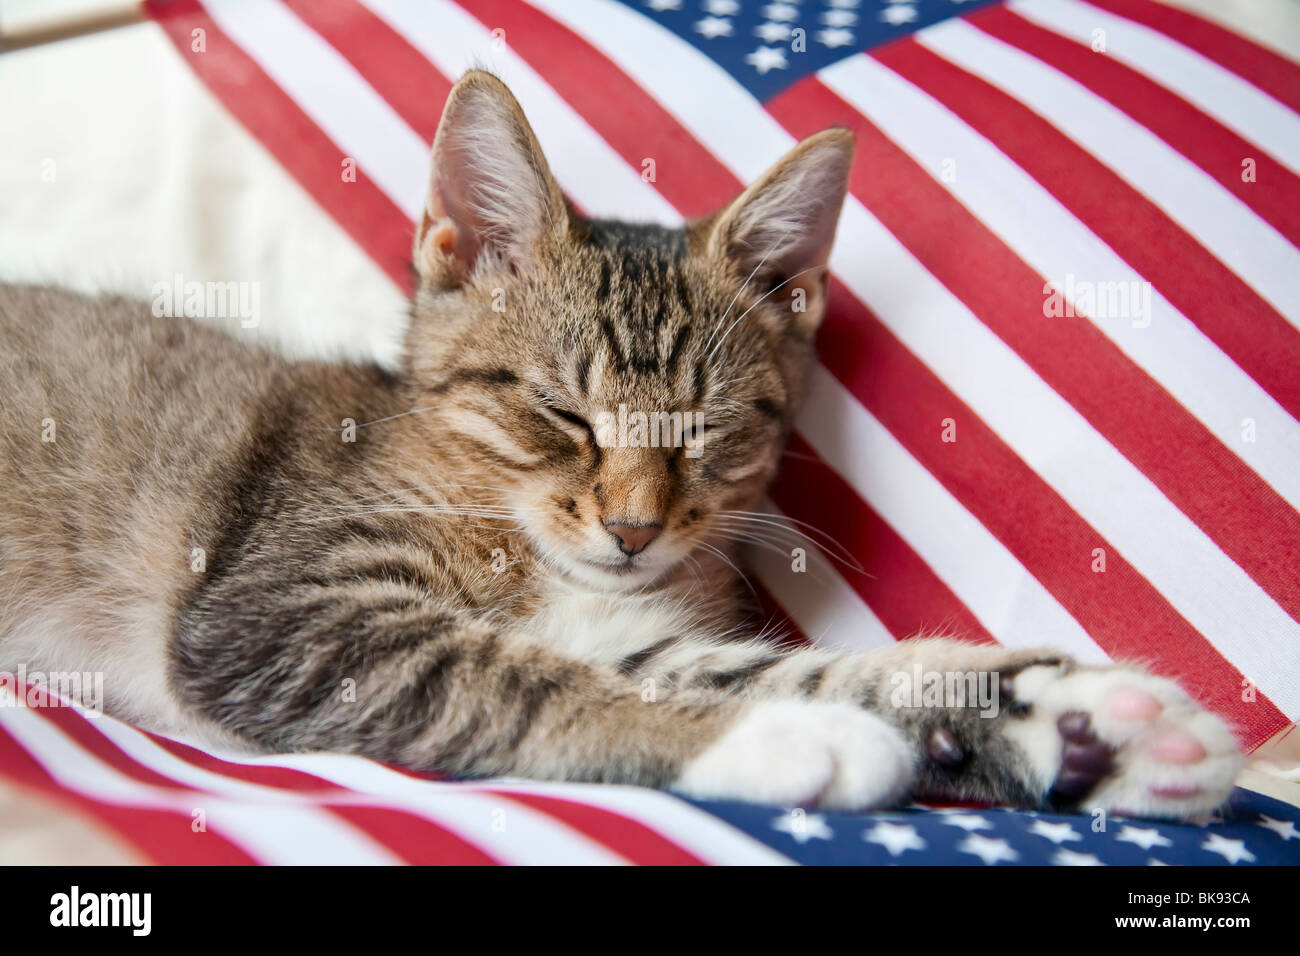 Kitten resting on an American flag Stock Photo